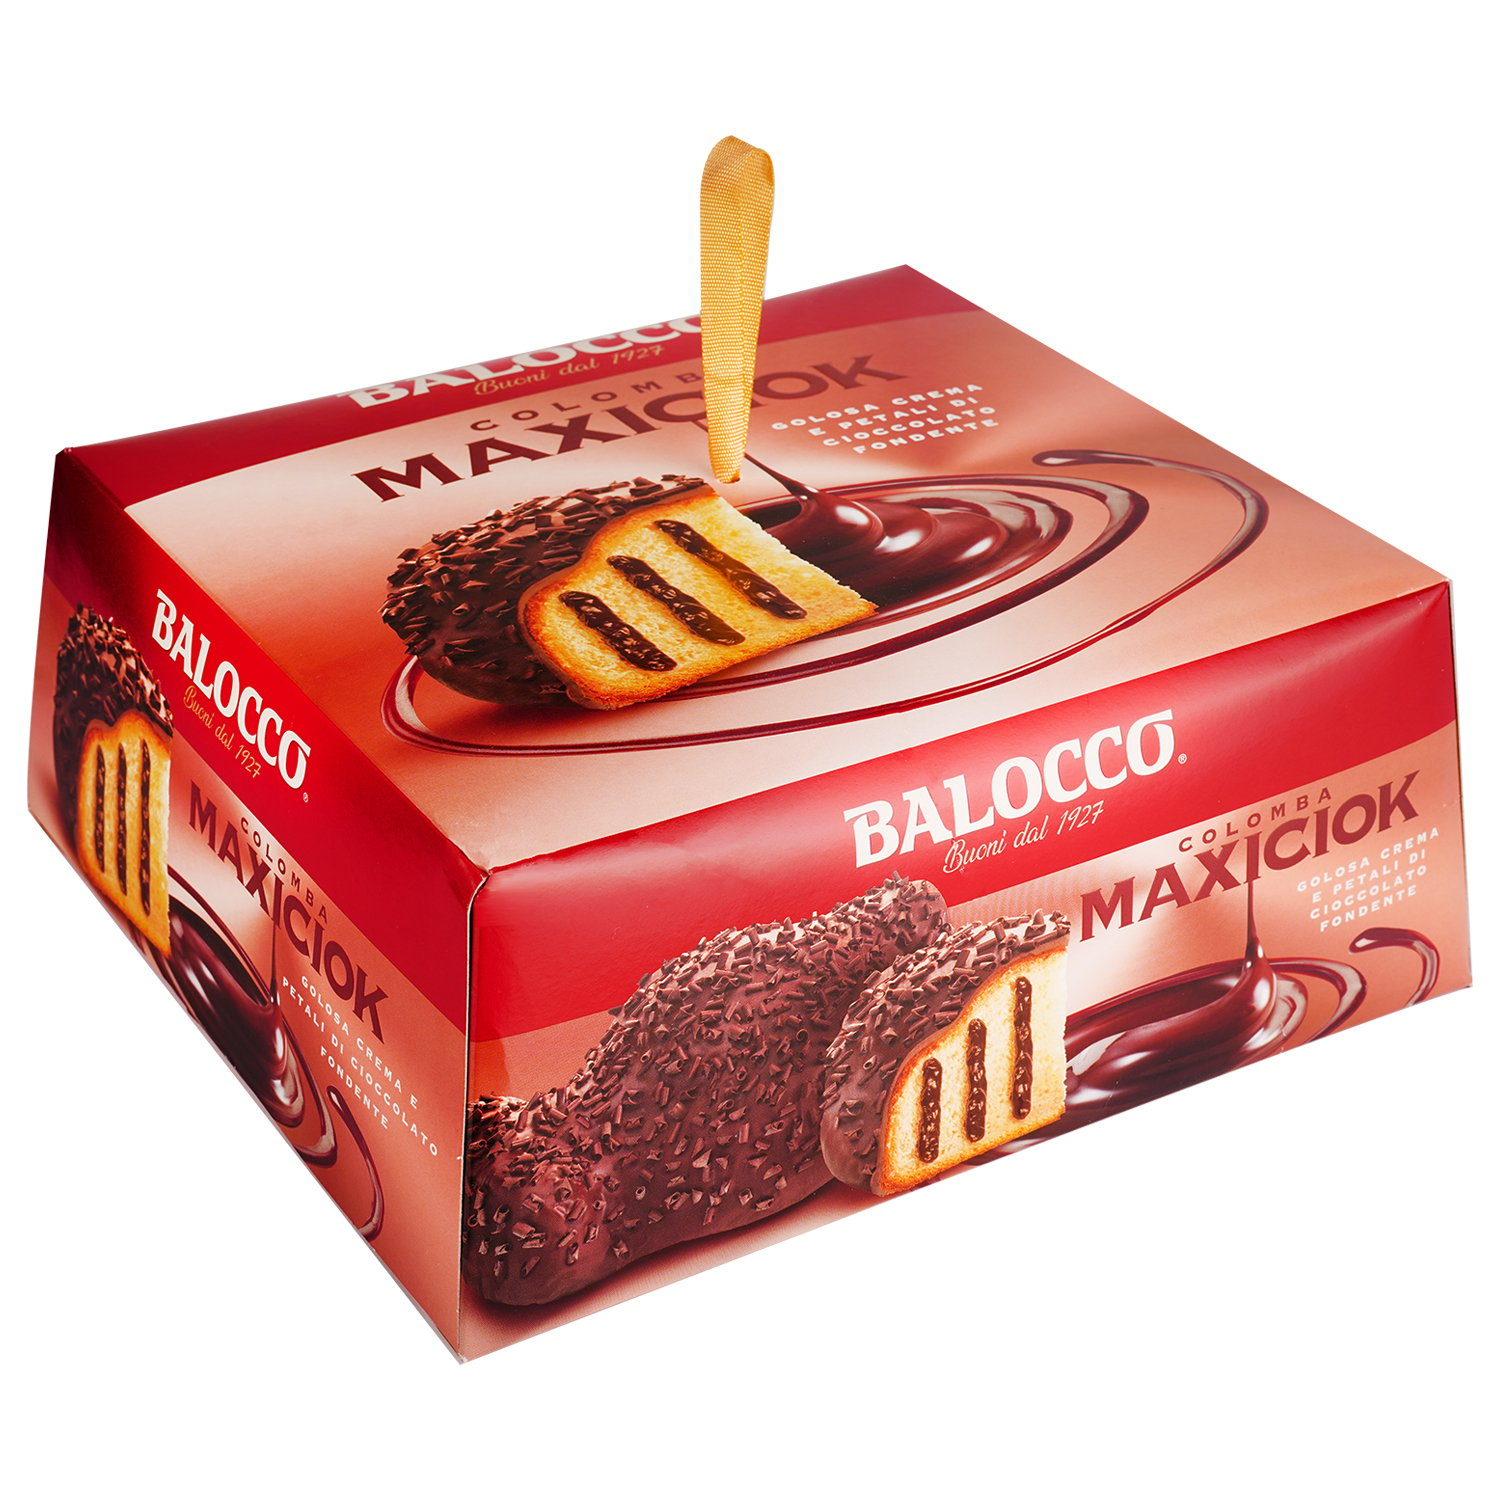 Коломба Balocco Colombа Maxiciok с начинкой из черного шоколада 750 г (892440) - фото 1